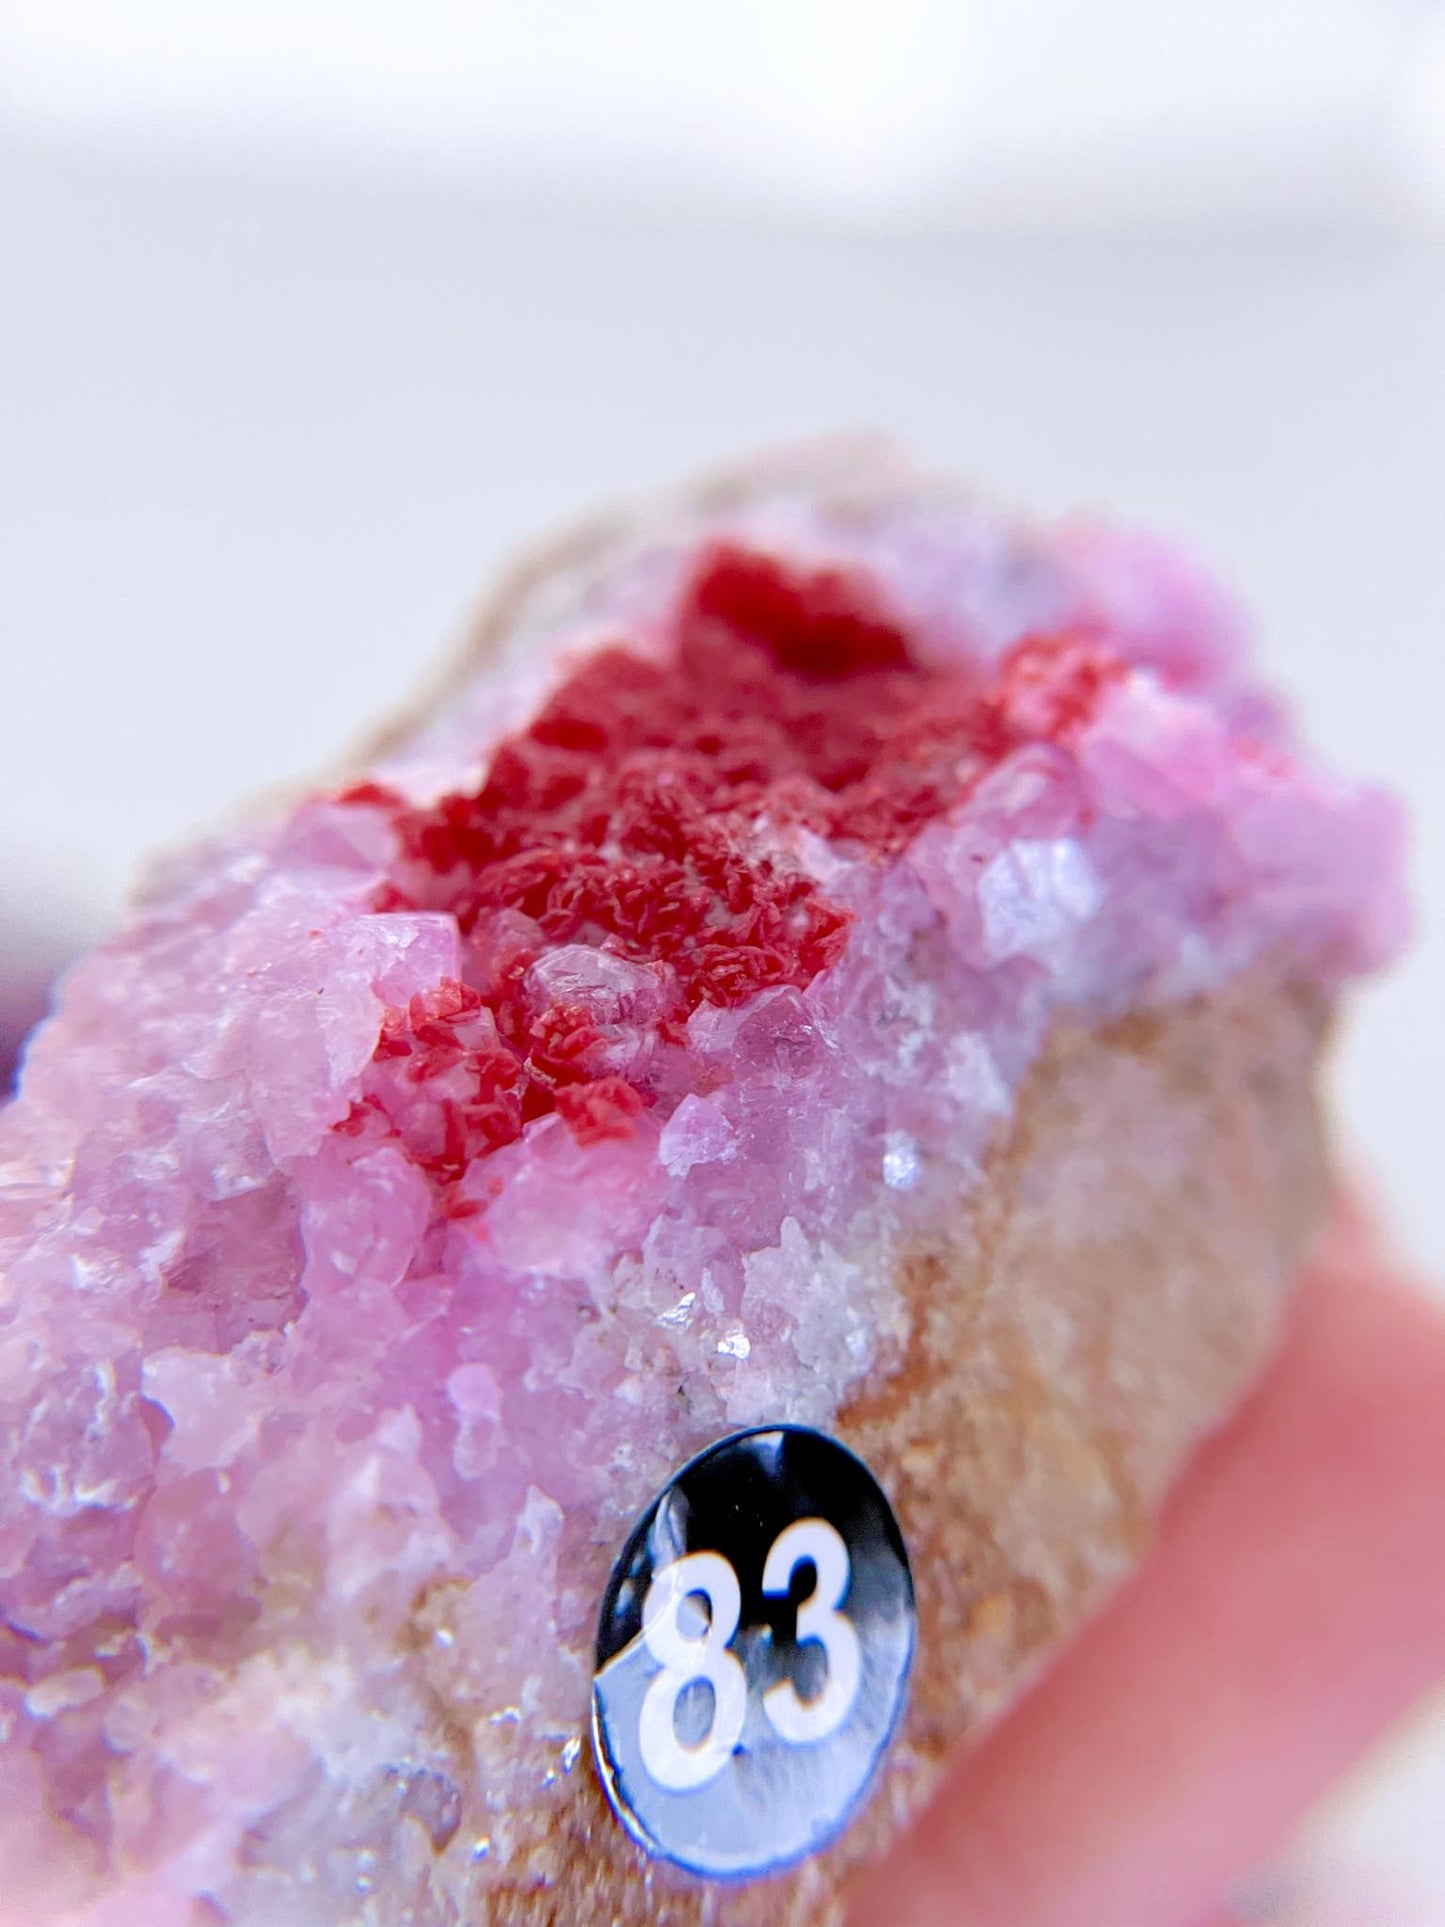 Hot and Jucy Pink Cobalto Calcite Specimen [83]- aus Marokko High Quality